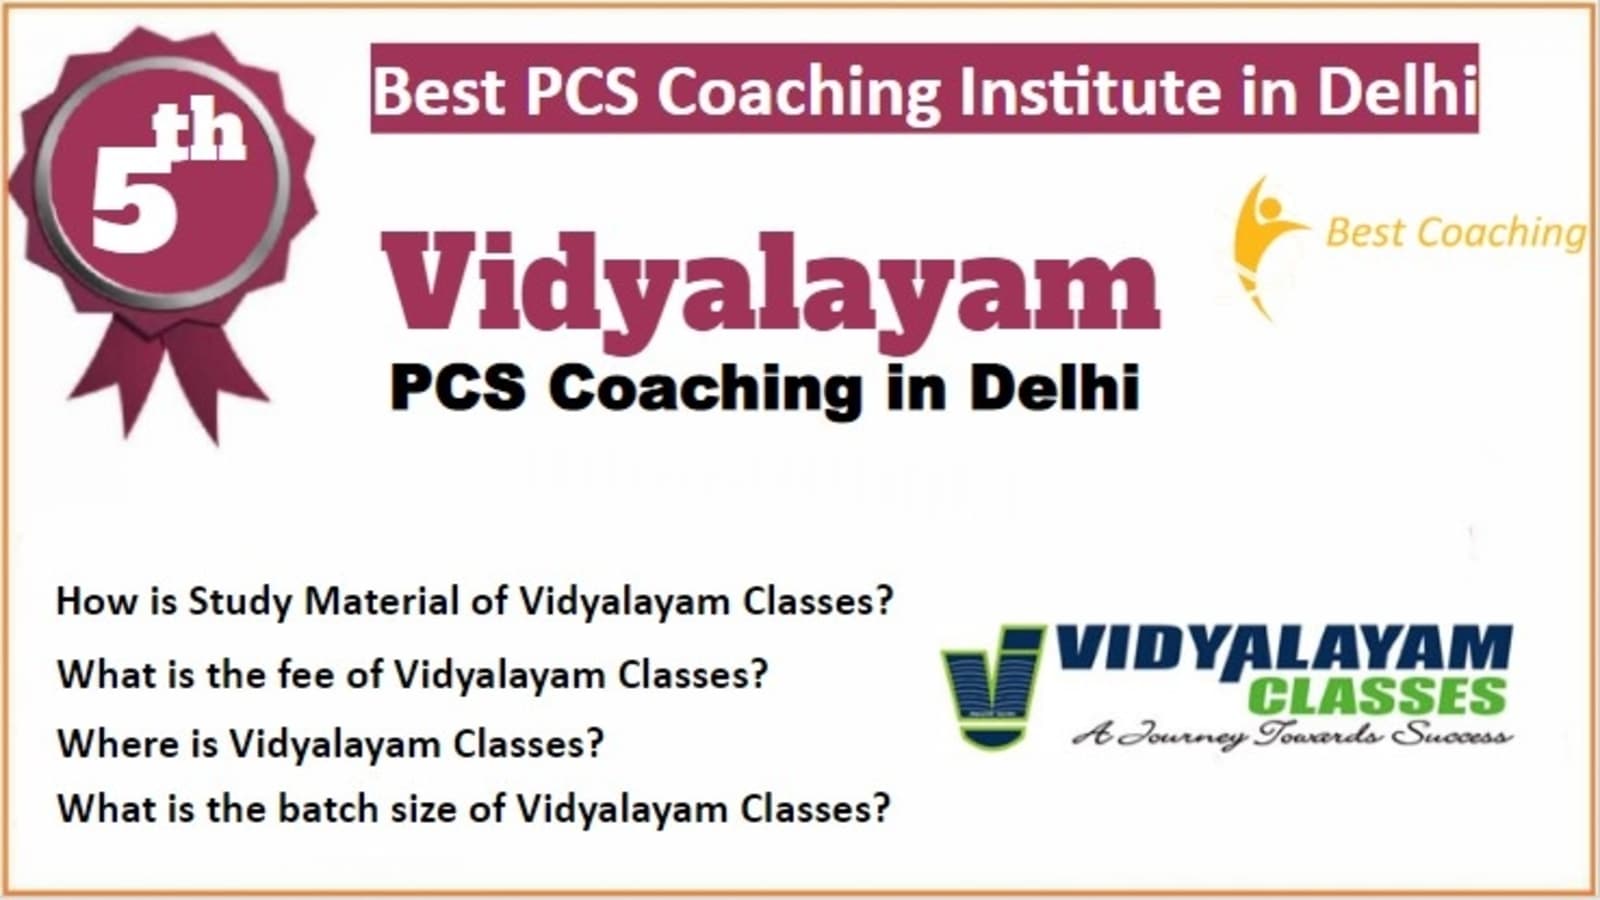 Rank 5 Best PCS Coaching in Delhi